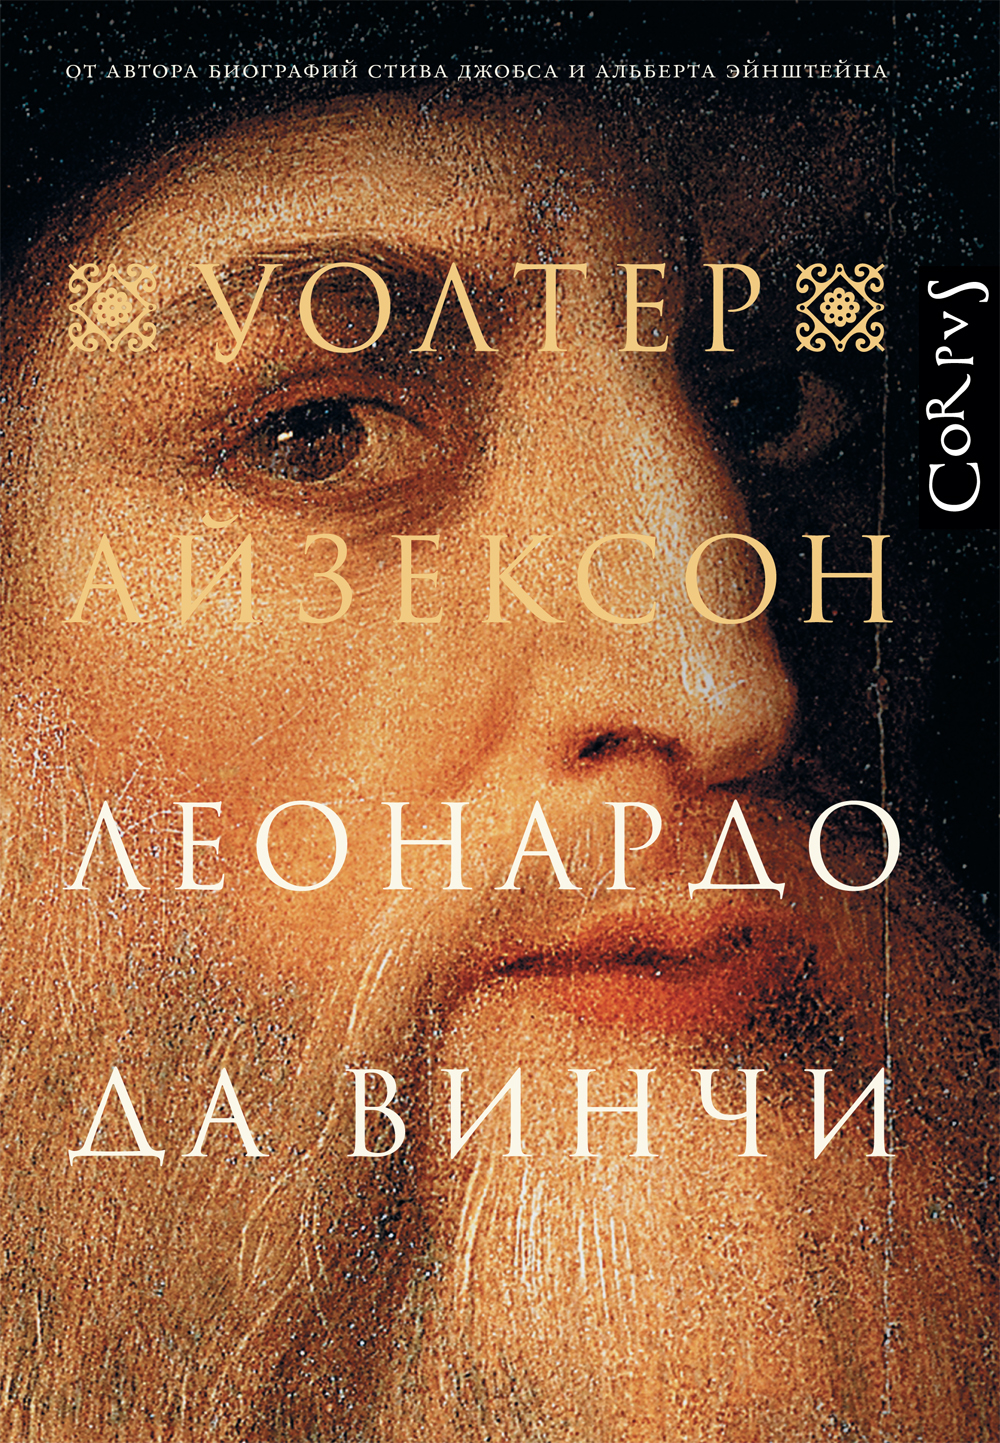 Book “Леонардо да Винчи” by Уолтер Айзексон